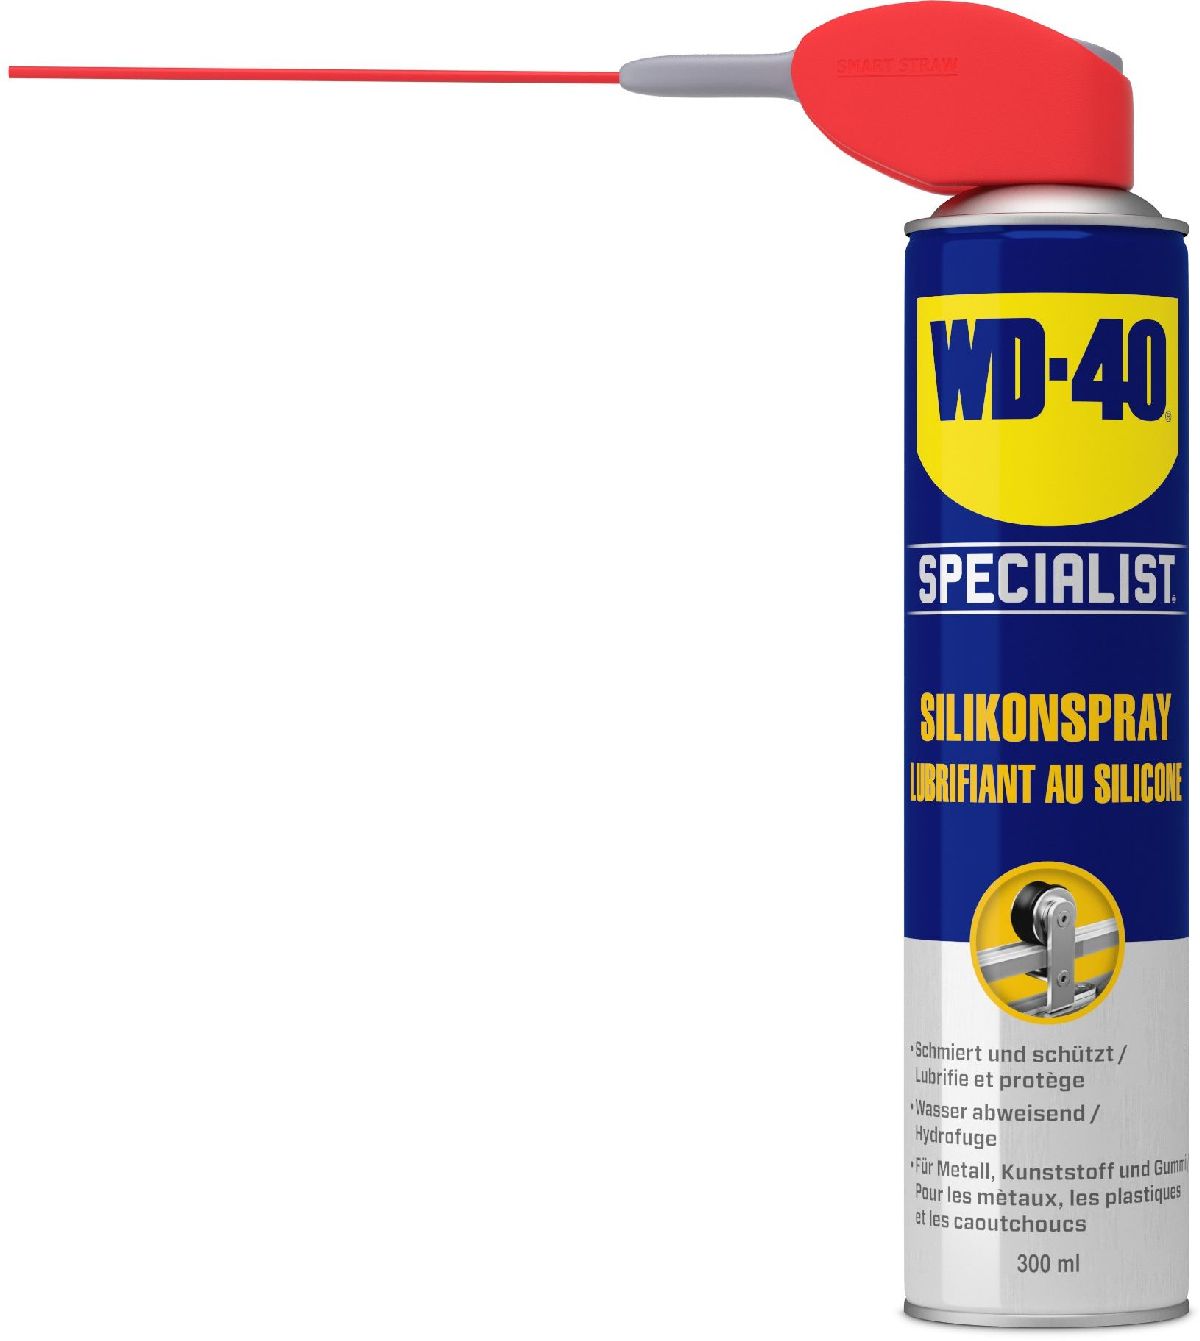 WD-40 Specialist Lubrifiant au Silicone Bombe arosol 300 ml